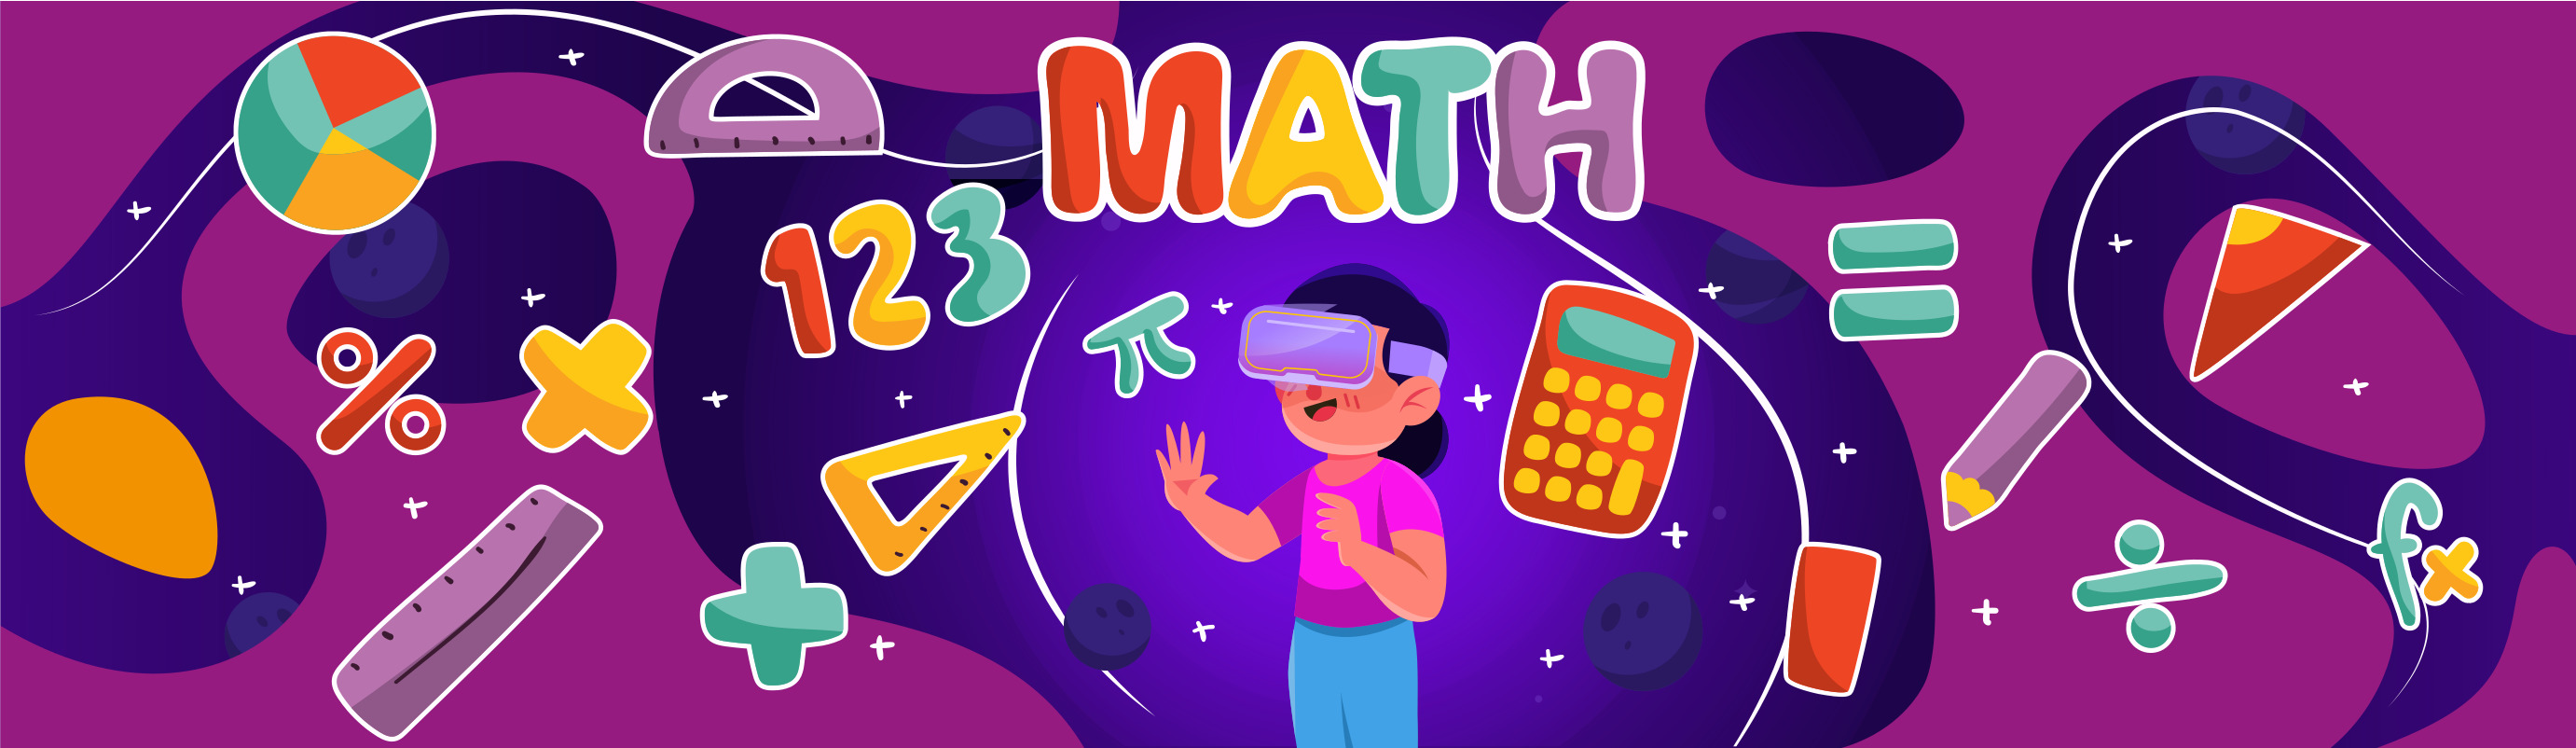 2nd-grade-math-online-games-for-improving-math-skills-argoprep